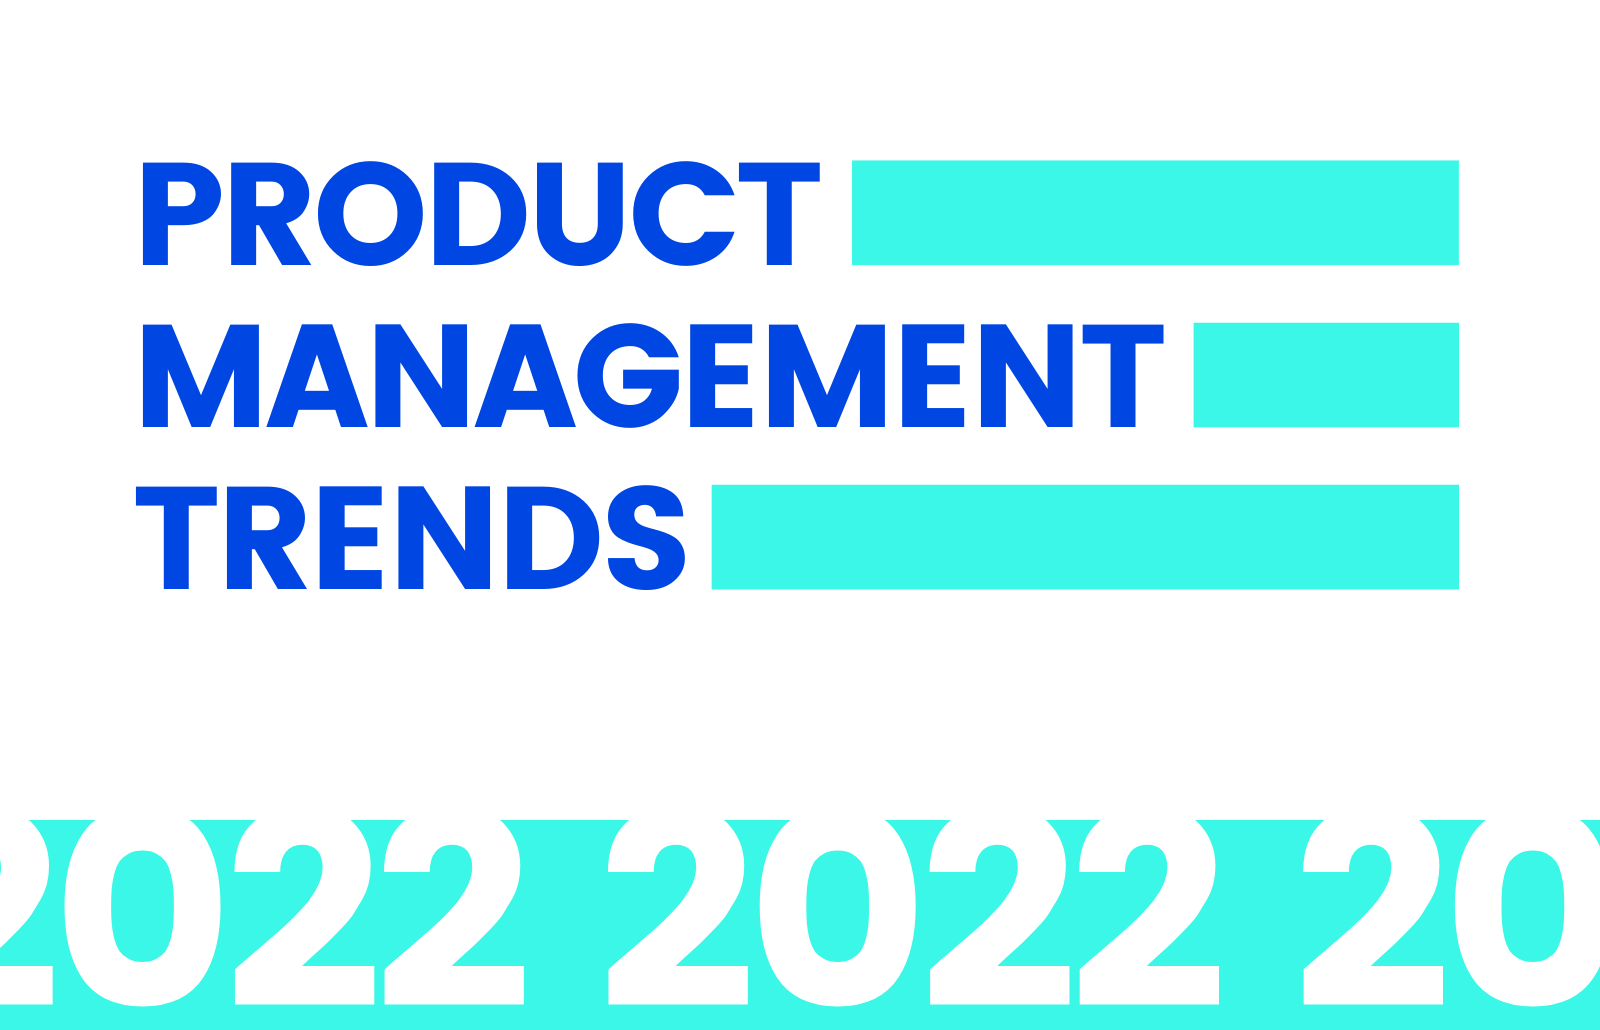 product management trends 2022